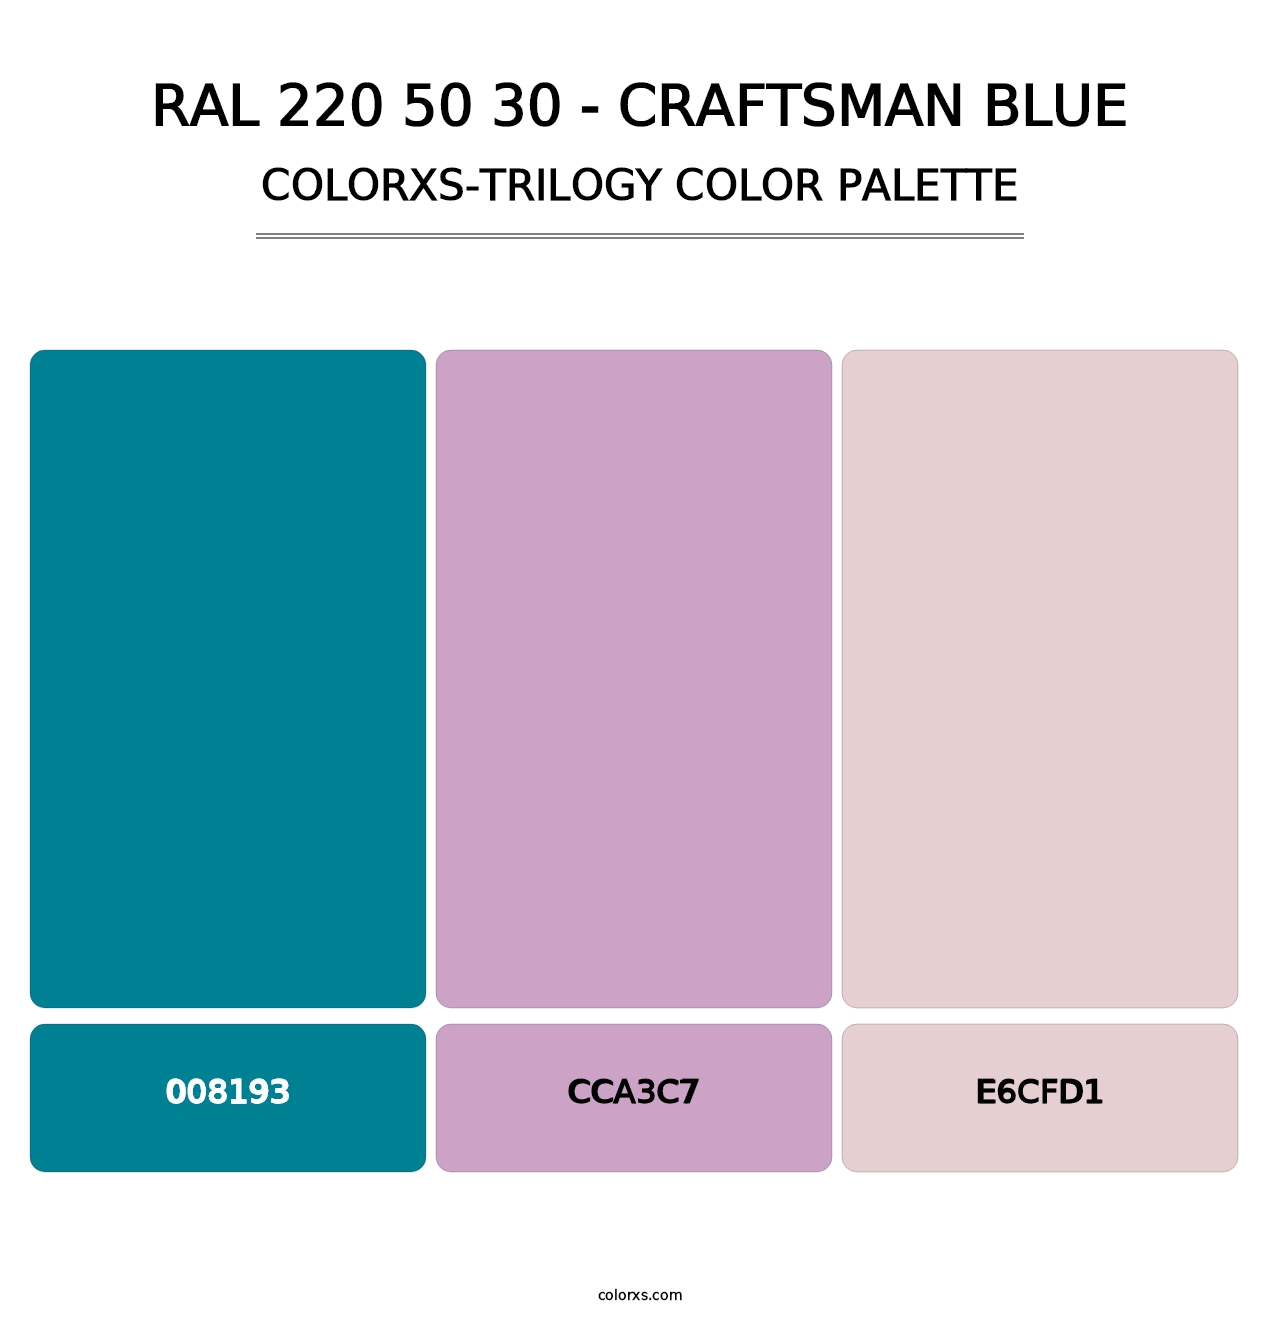 RAL 220 50 30 - Craftsman Blue - Colorxs Trilogy Palette